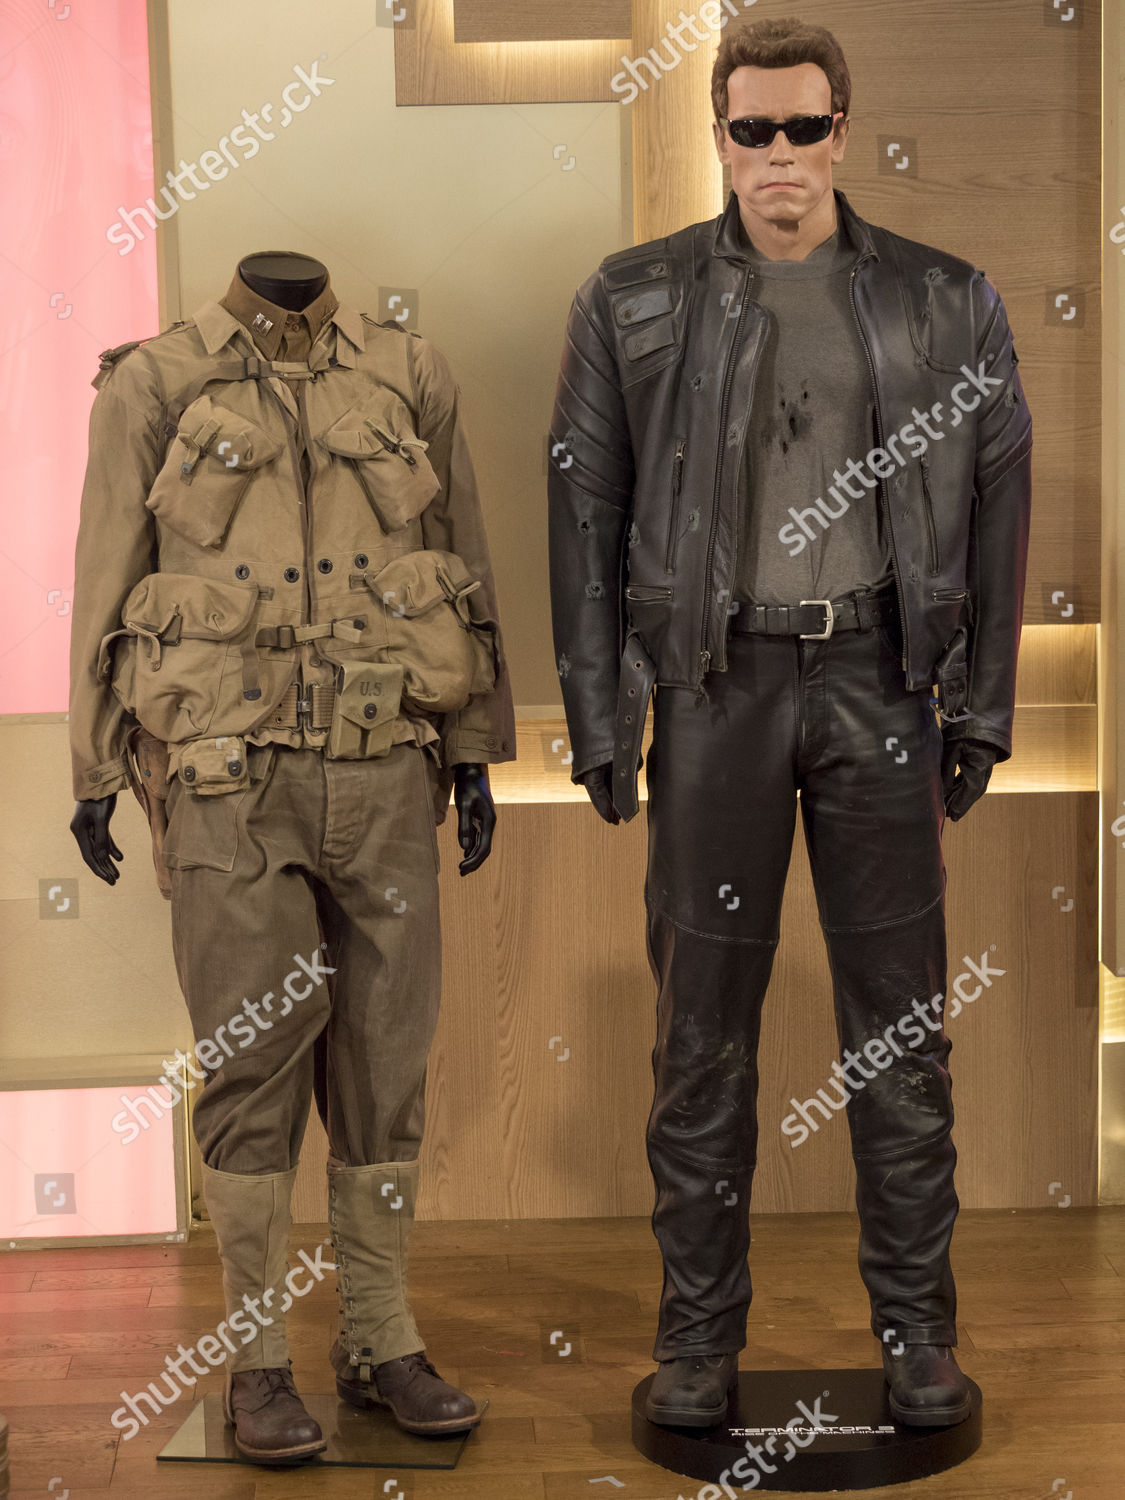 Original Terminator Outfit Editorial Stock Photo - Stock Image |  Shutterstock